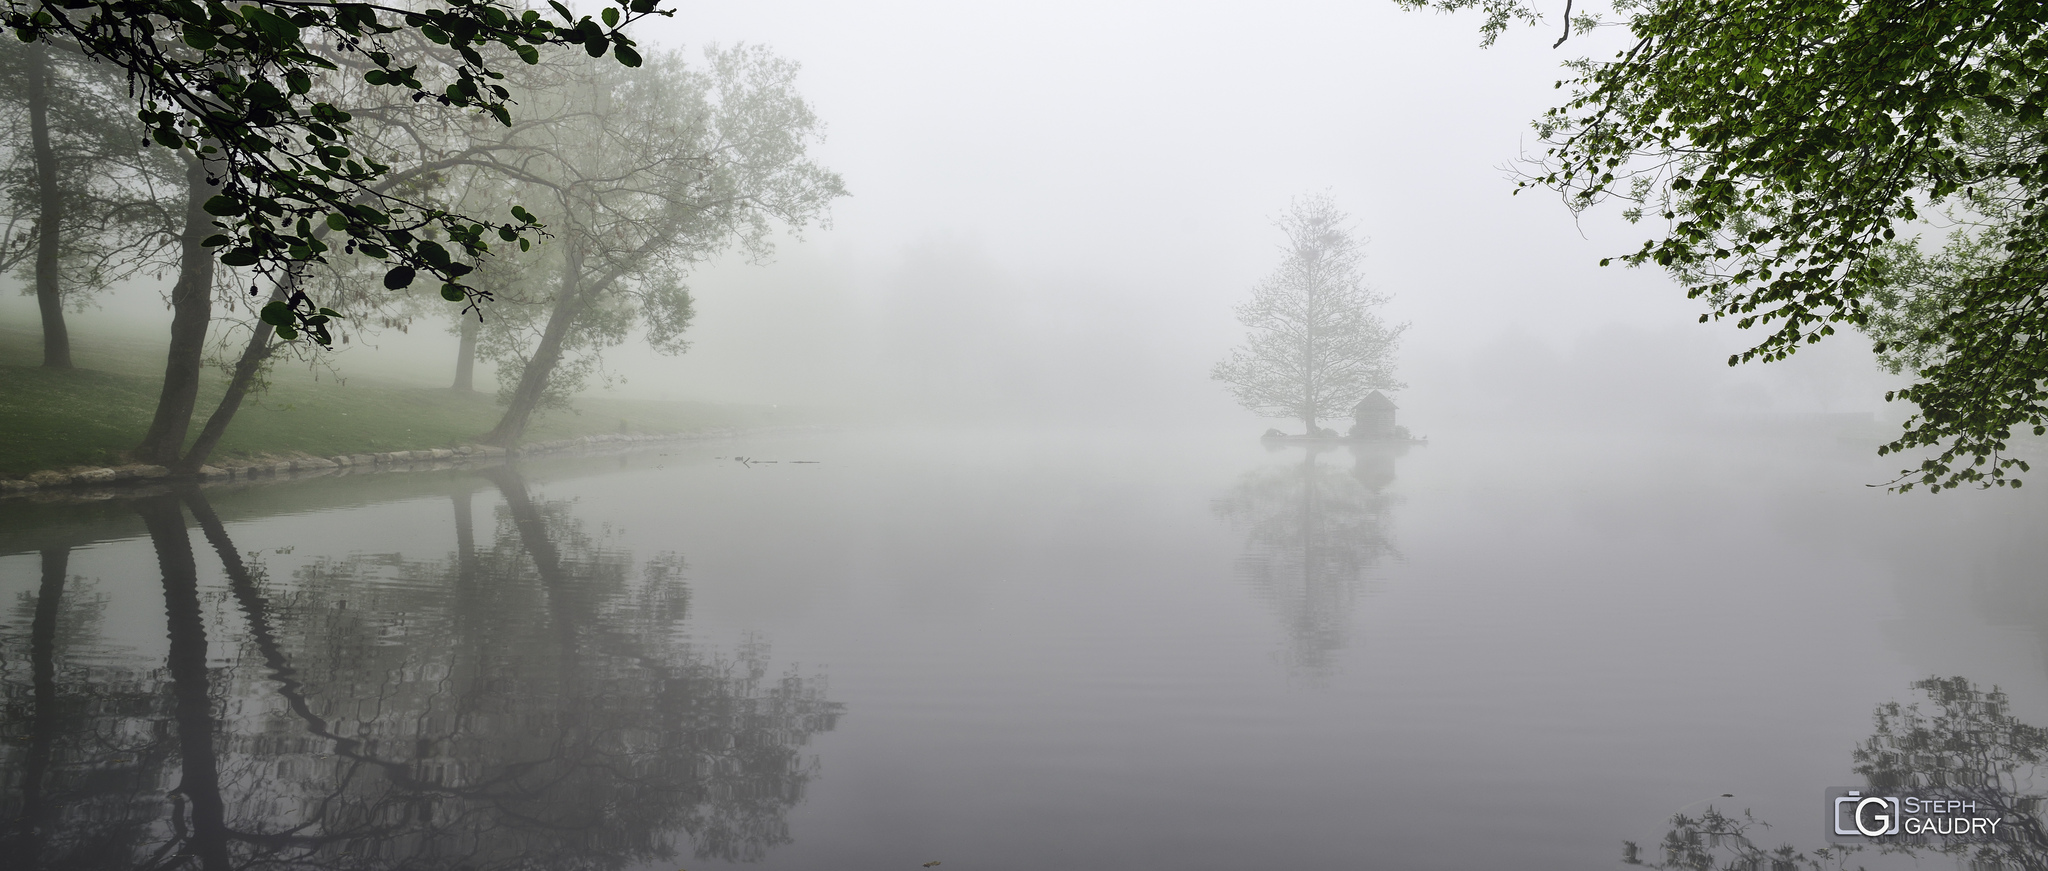 Domaine de Wégimont sous le brouillard [Klik om de diavoorstelling te starten]